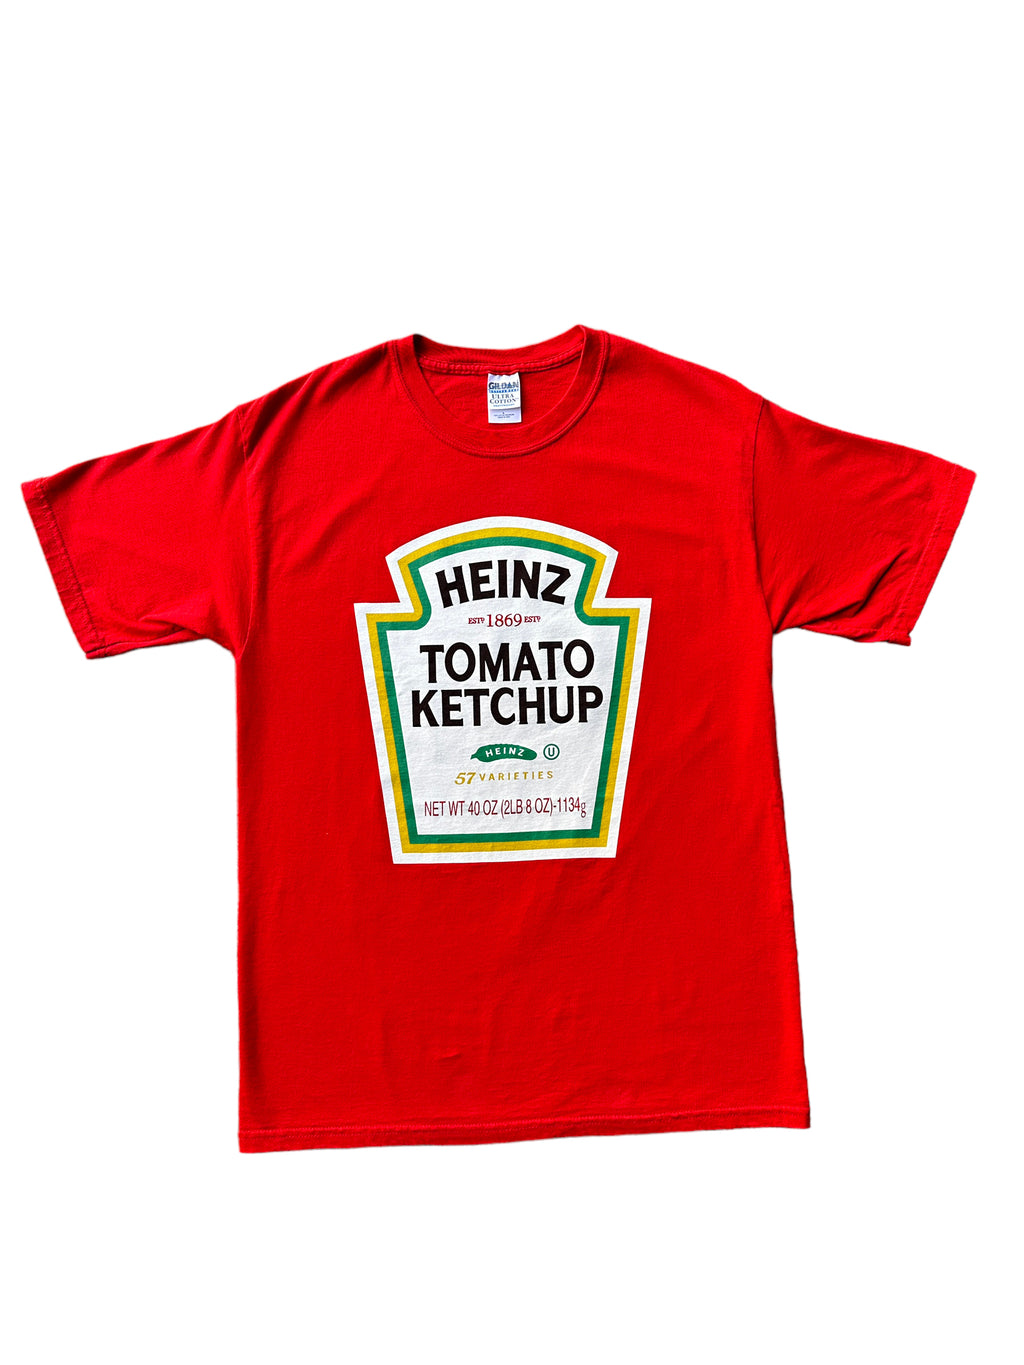 Heinz ketchup tee large